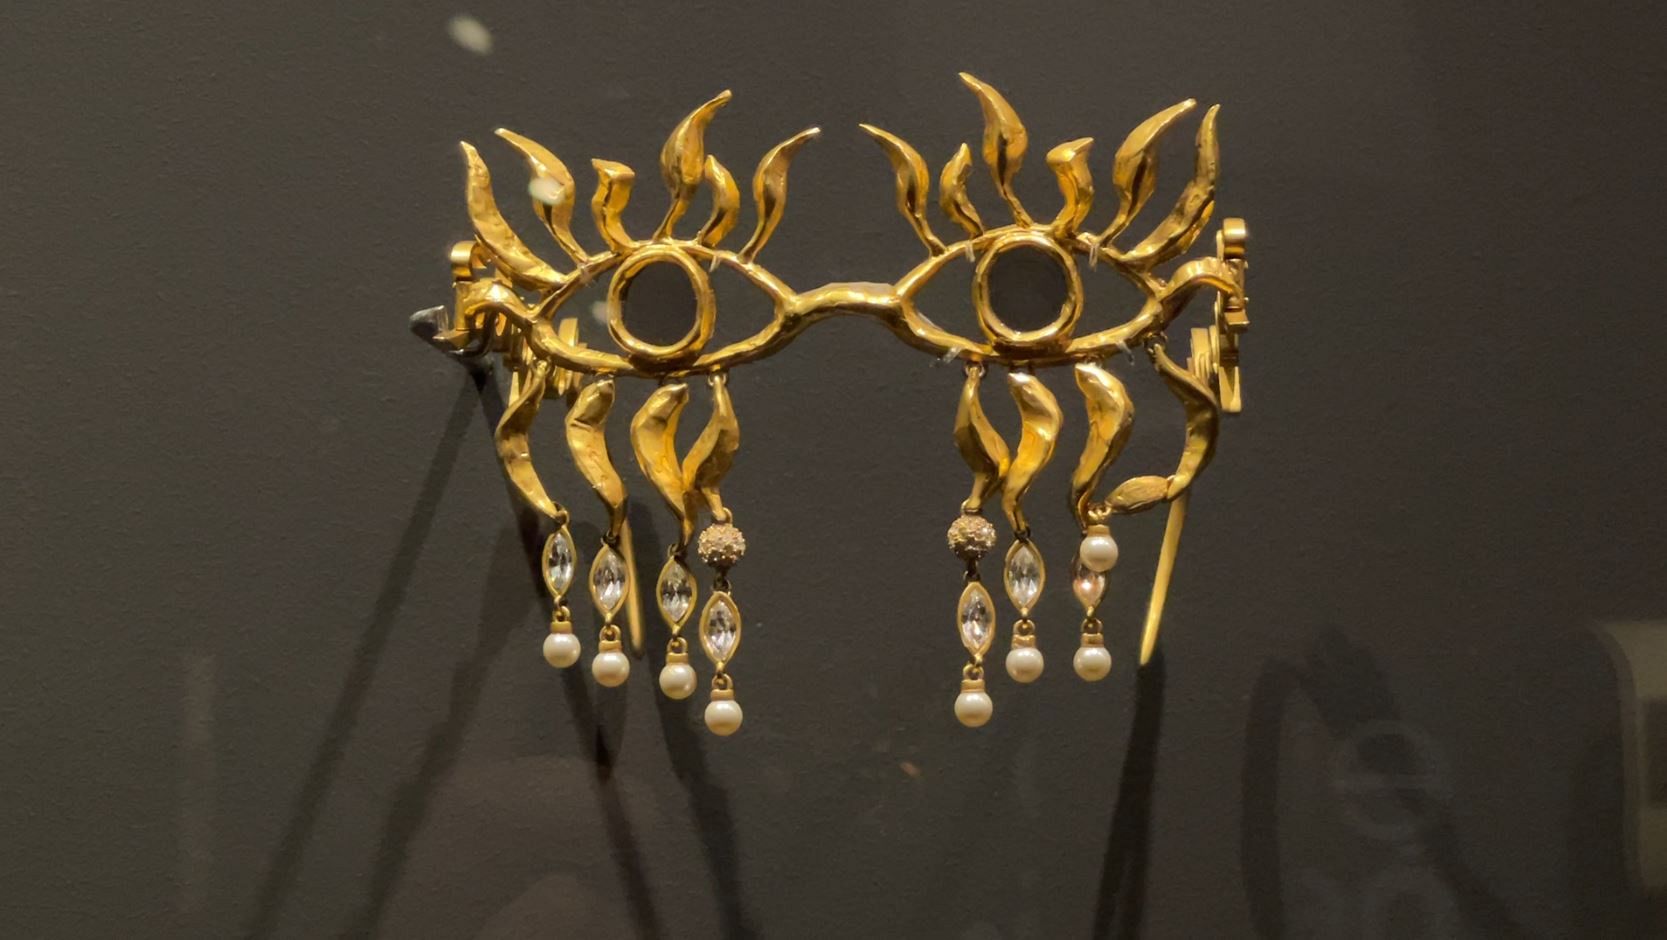 Elsa Schiaparelli collaborated with inventive jewelers